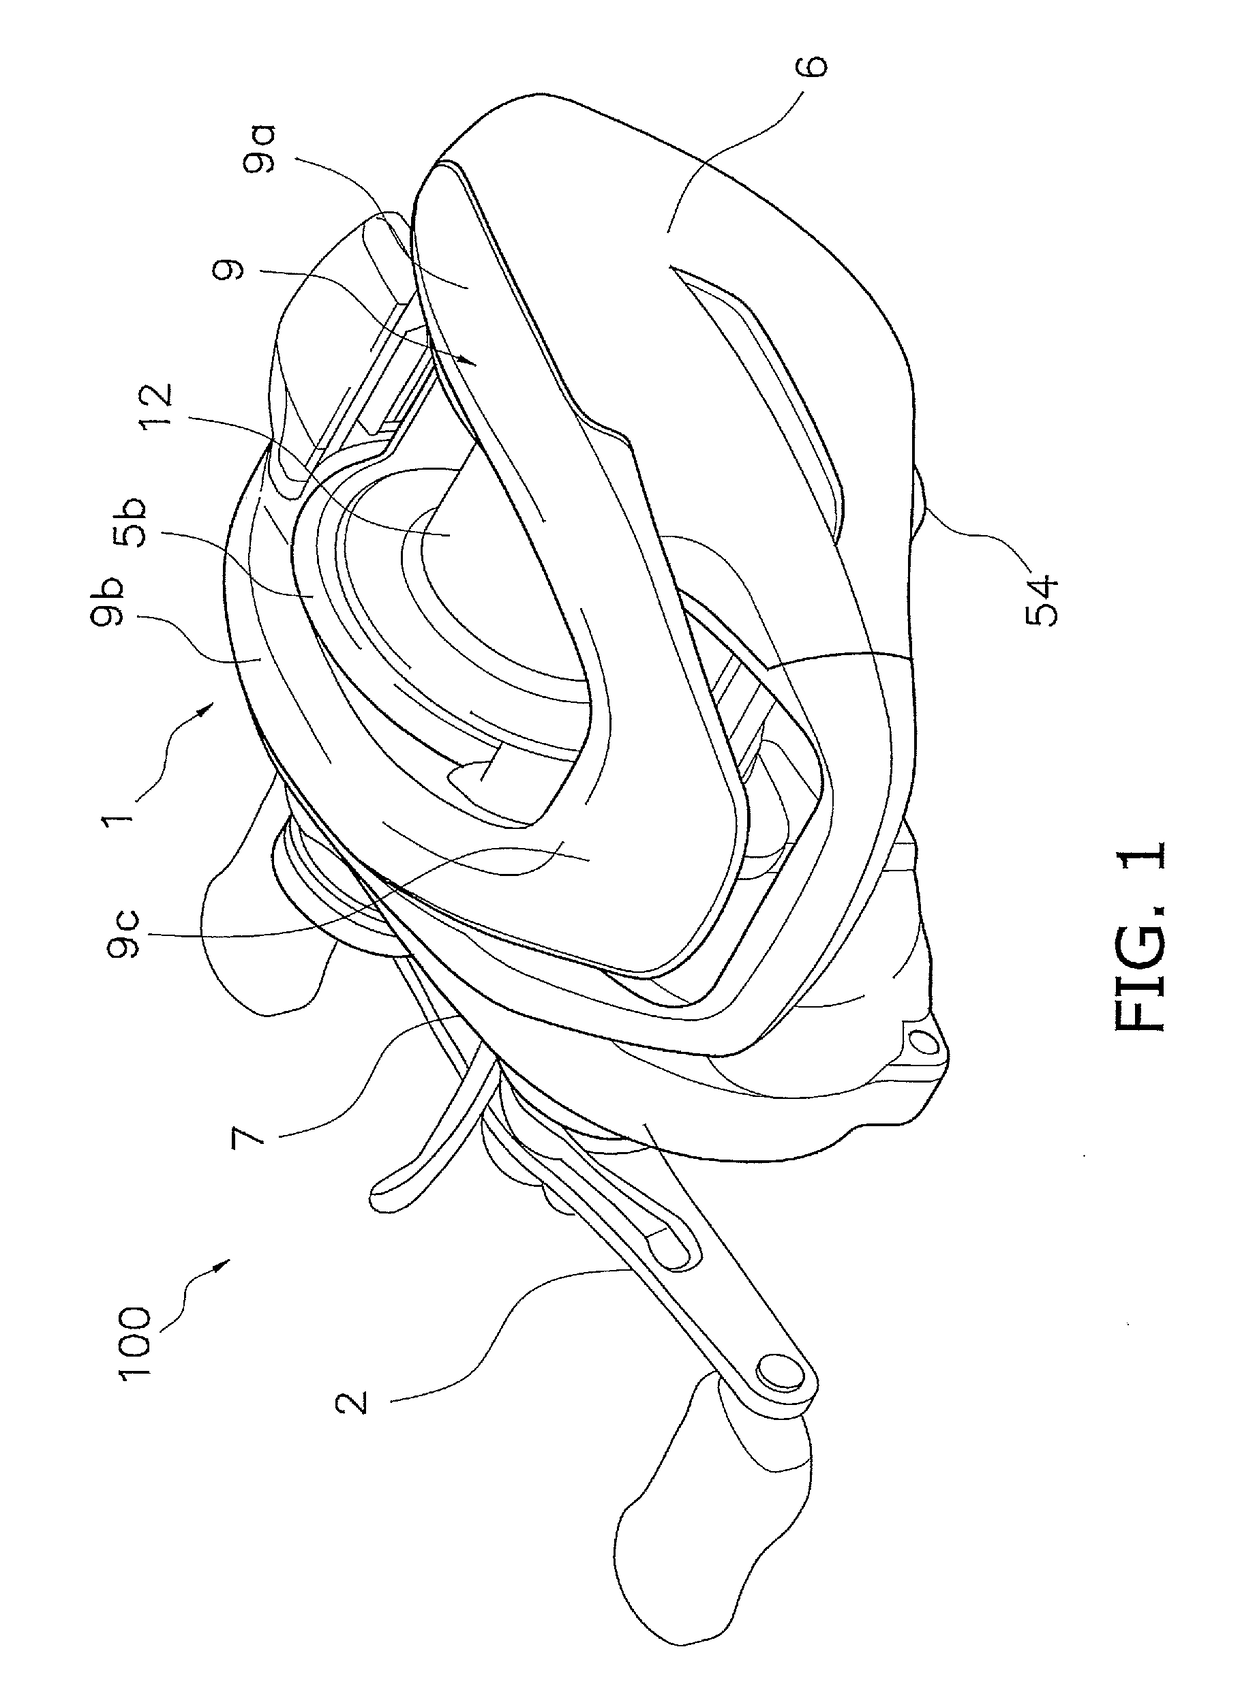 Spool brake device for dual-bearing reel